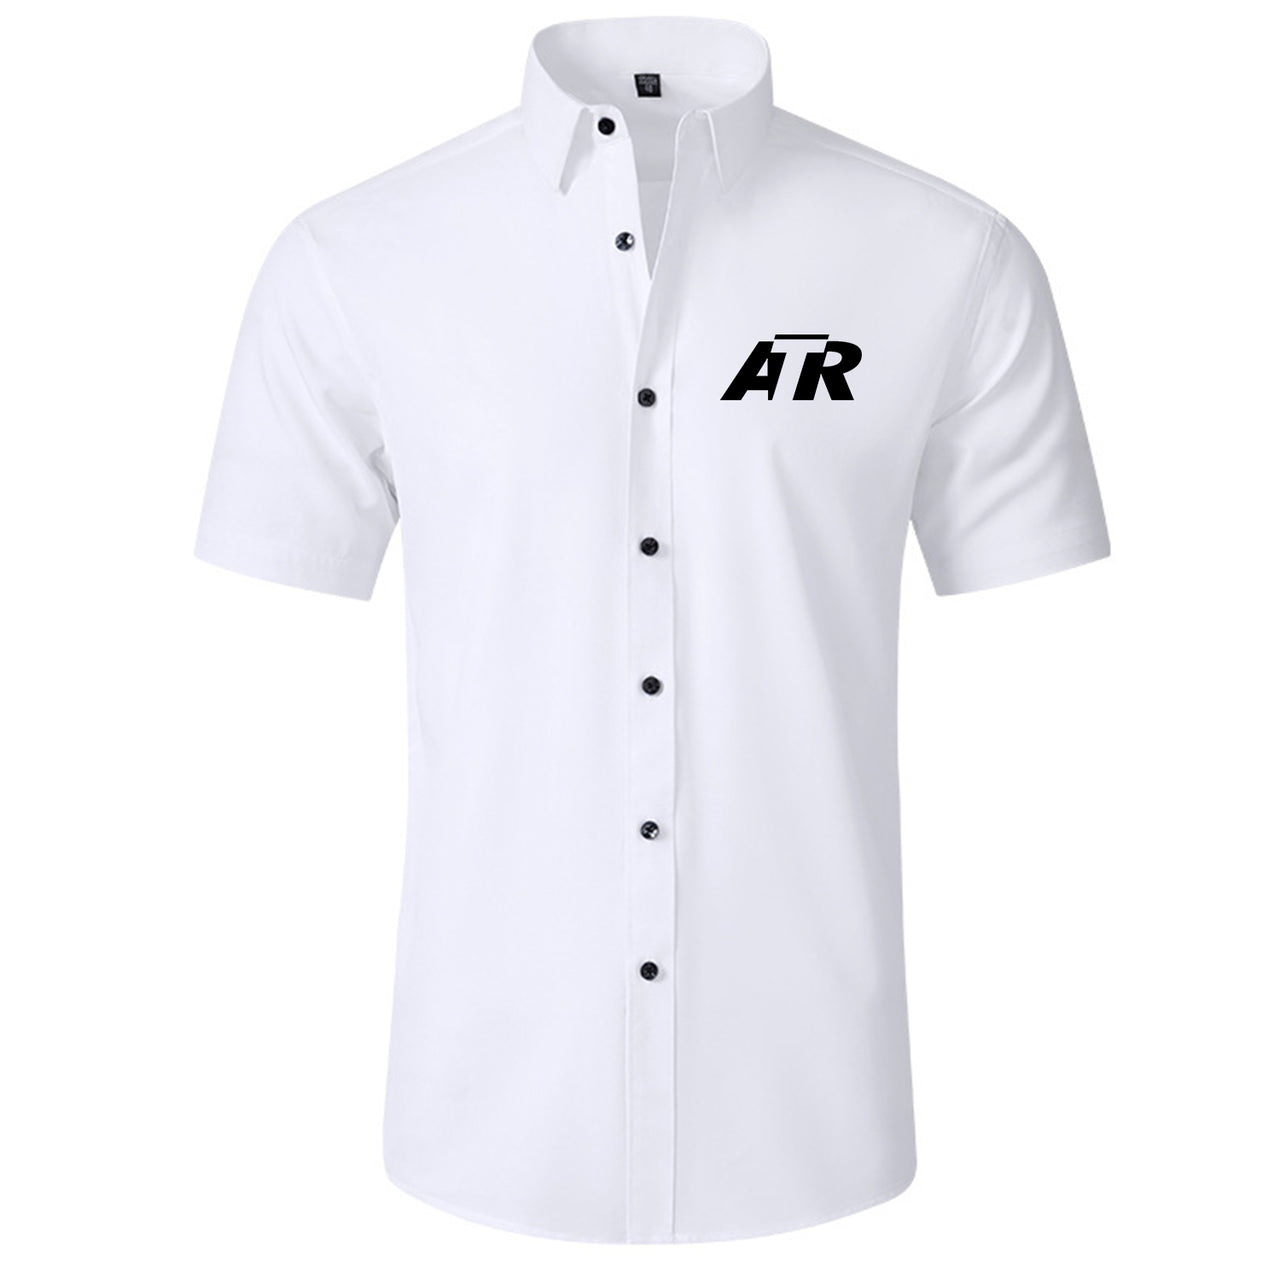 ATR & Text Designed Short Sleeve Shirts